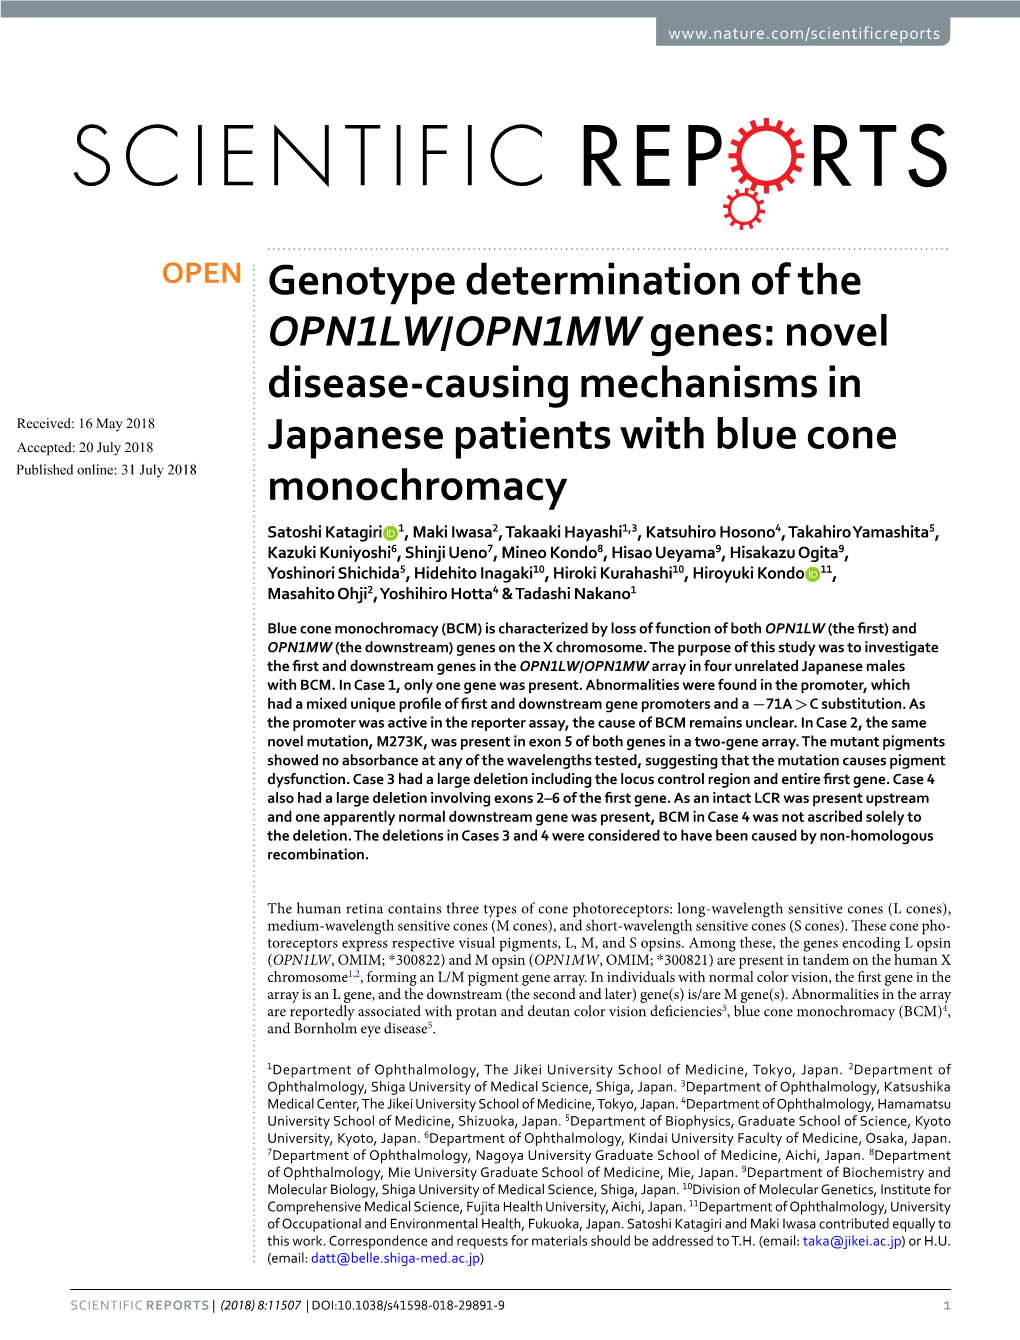 Genotype Determination of the OPN1LW/OPN1MW Genes: Novel